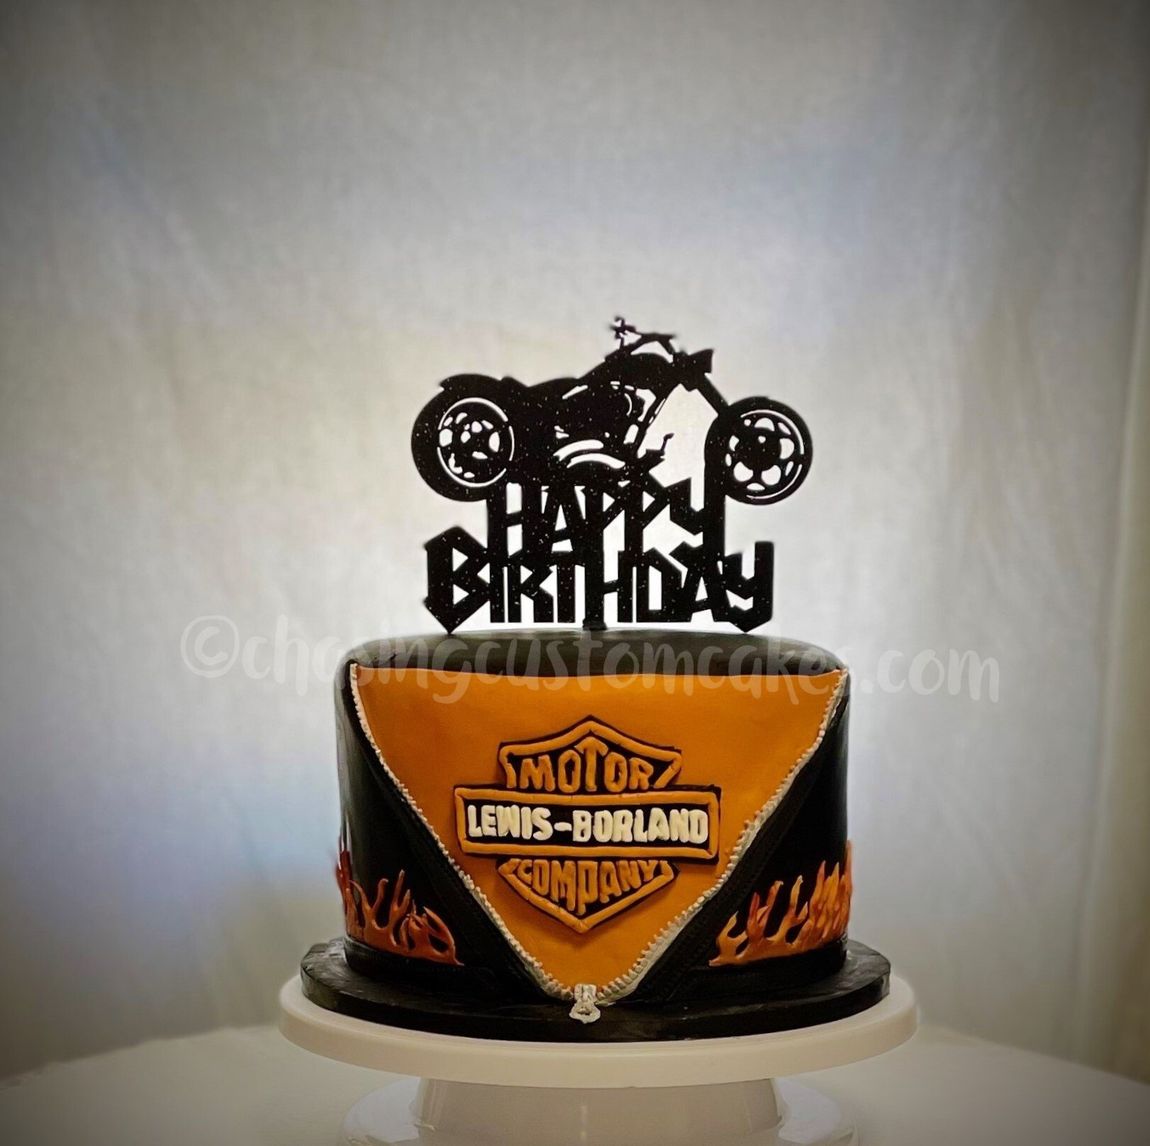 Harley Davidson style cake